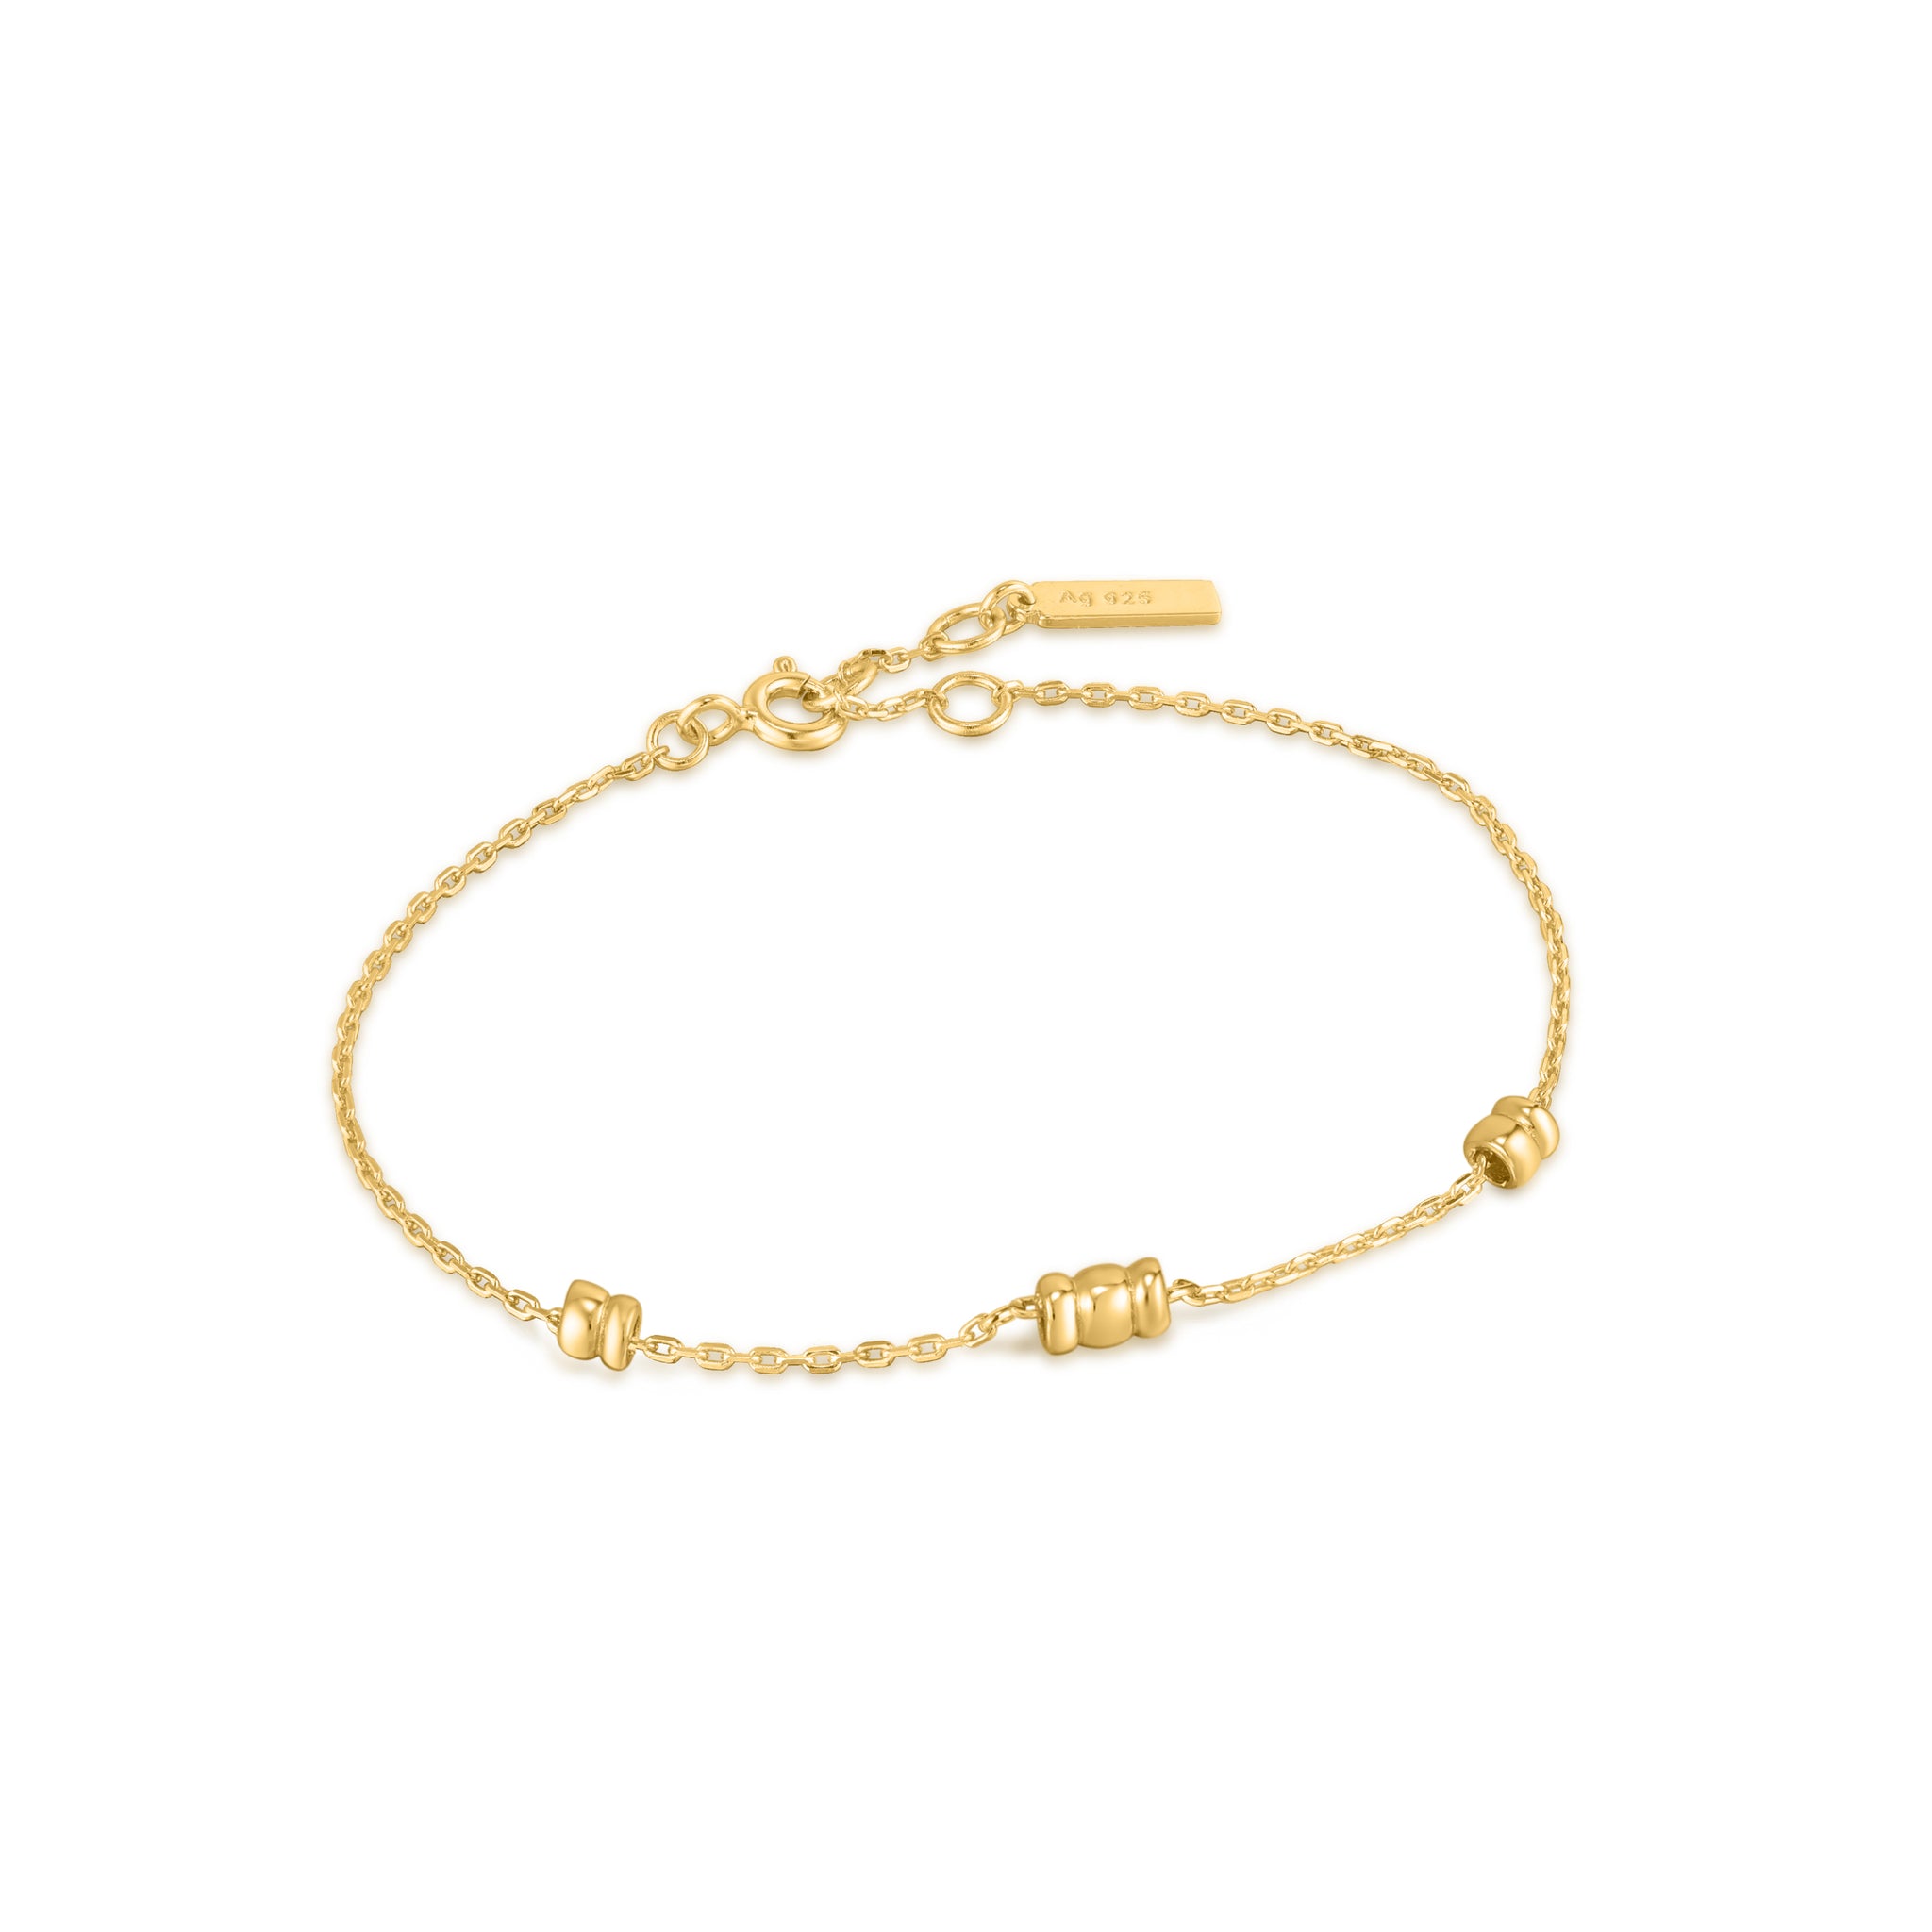 Buy quality Exquisite yellow gold 22karat gold bracelet for men in Pune